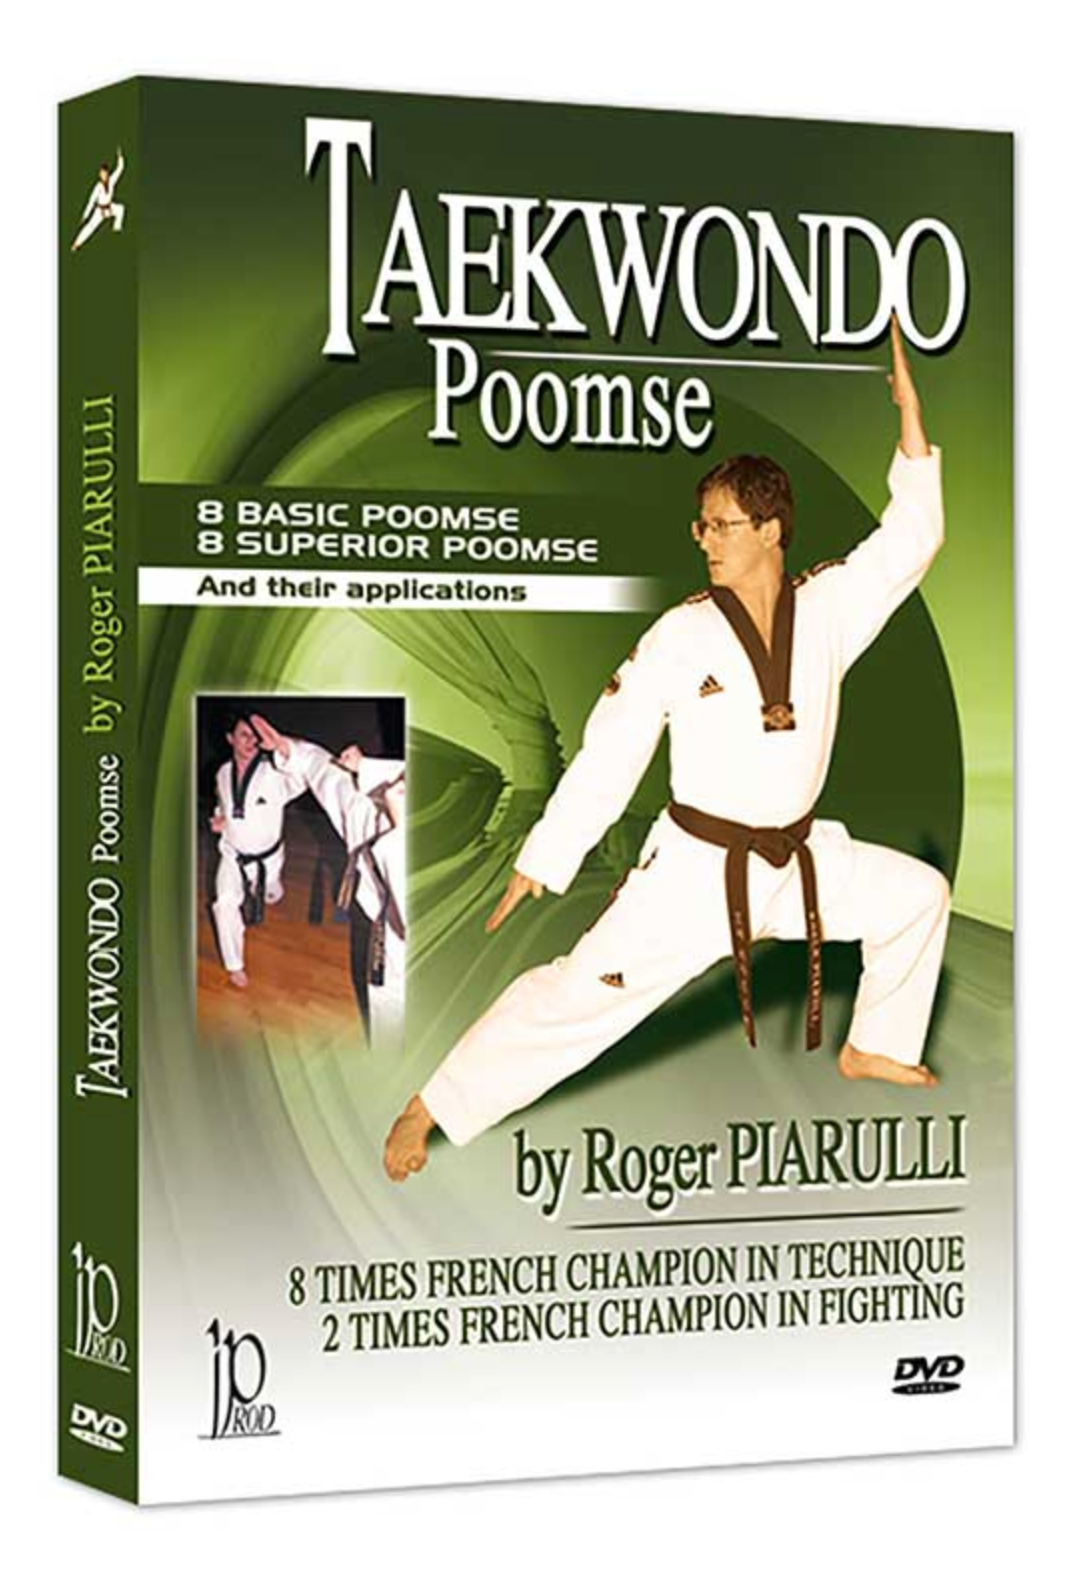 Taekwondo Poomse DVD by Roger Piarulli